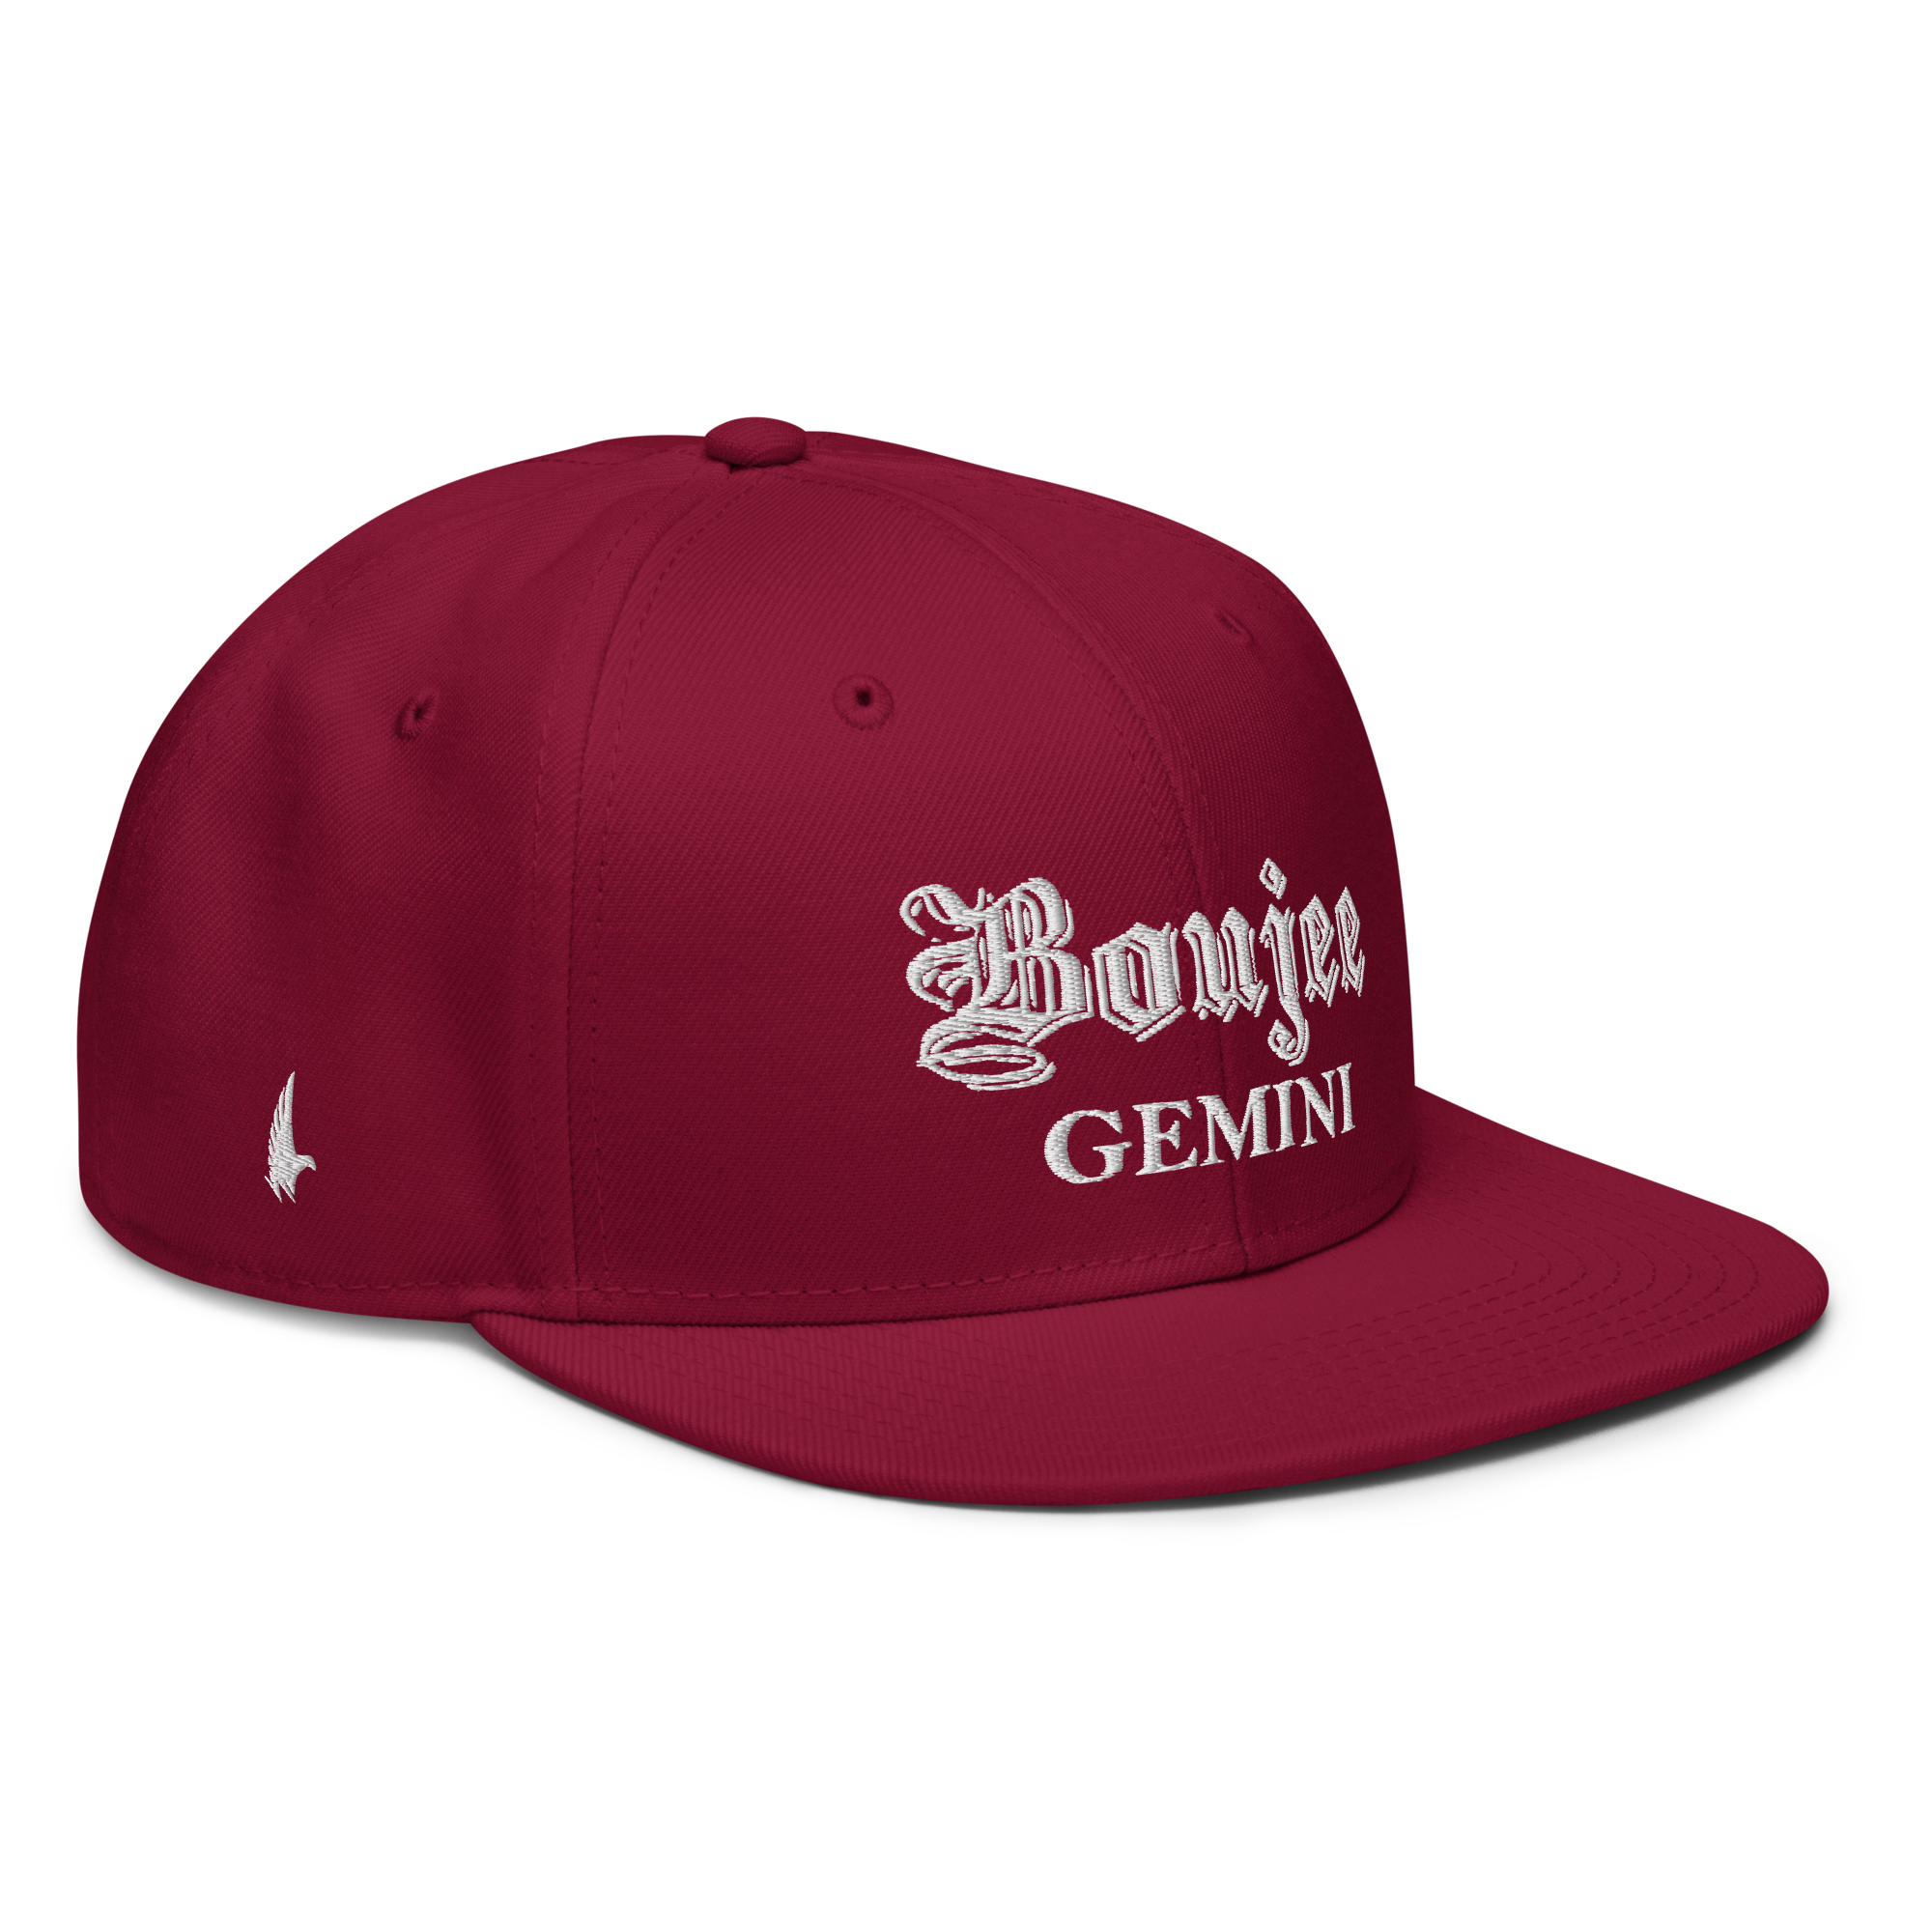 Boujee Gemini Snapback Hat - Maroon - Loyalty Vibes